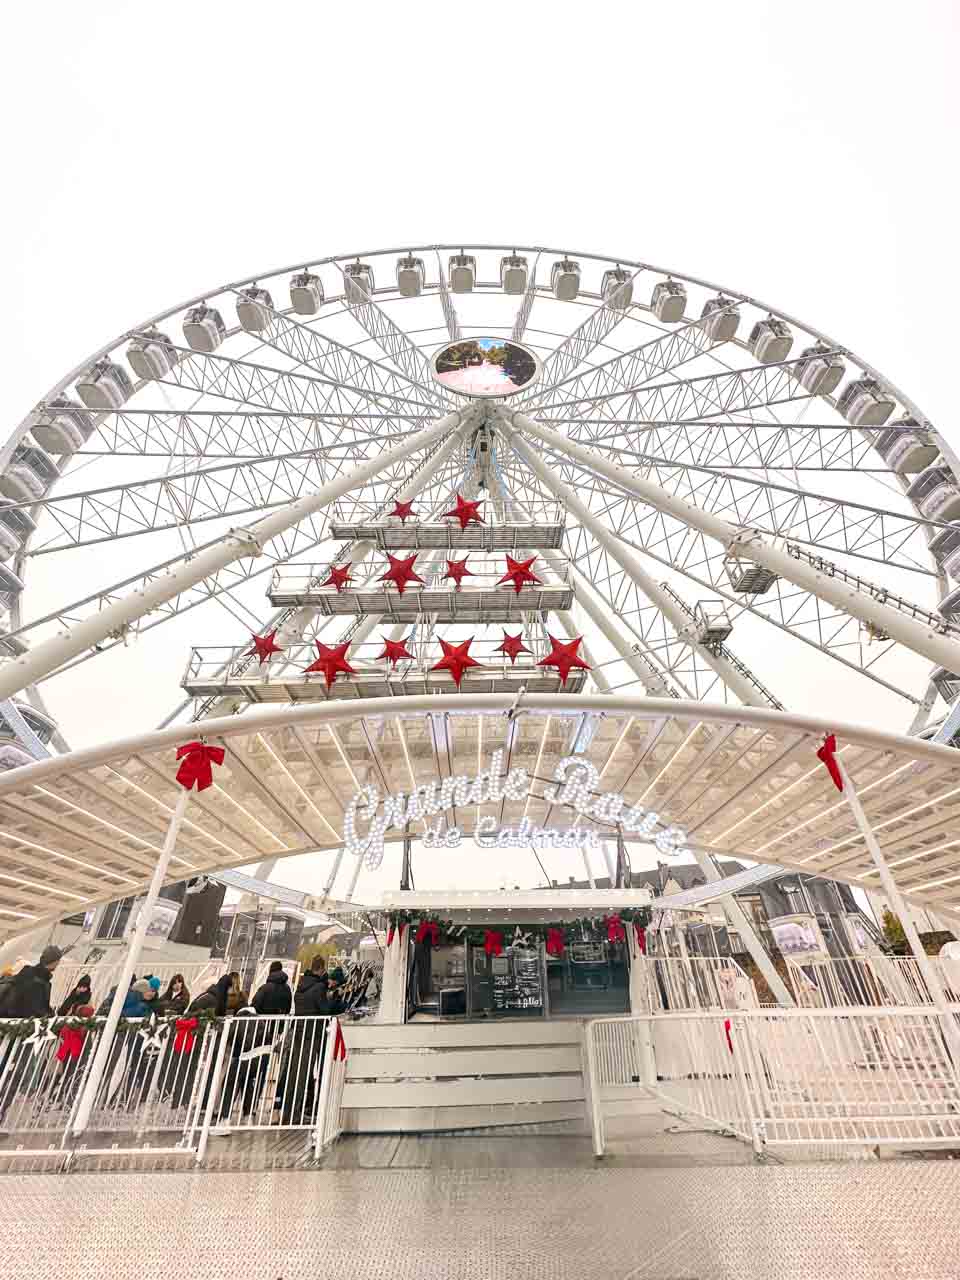 Grande roue de Colmar - a Ferris wheel adorned with white stars and festive red bows